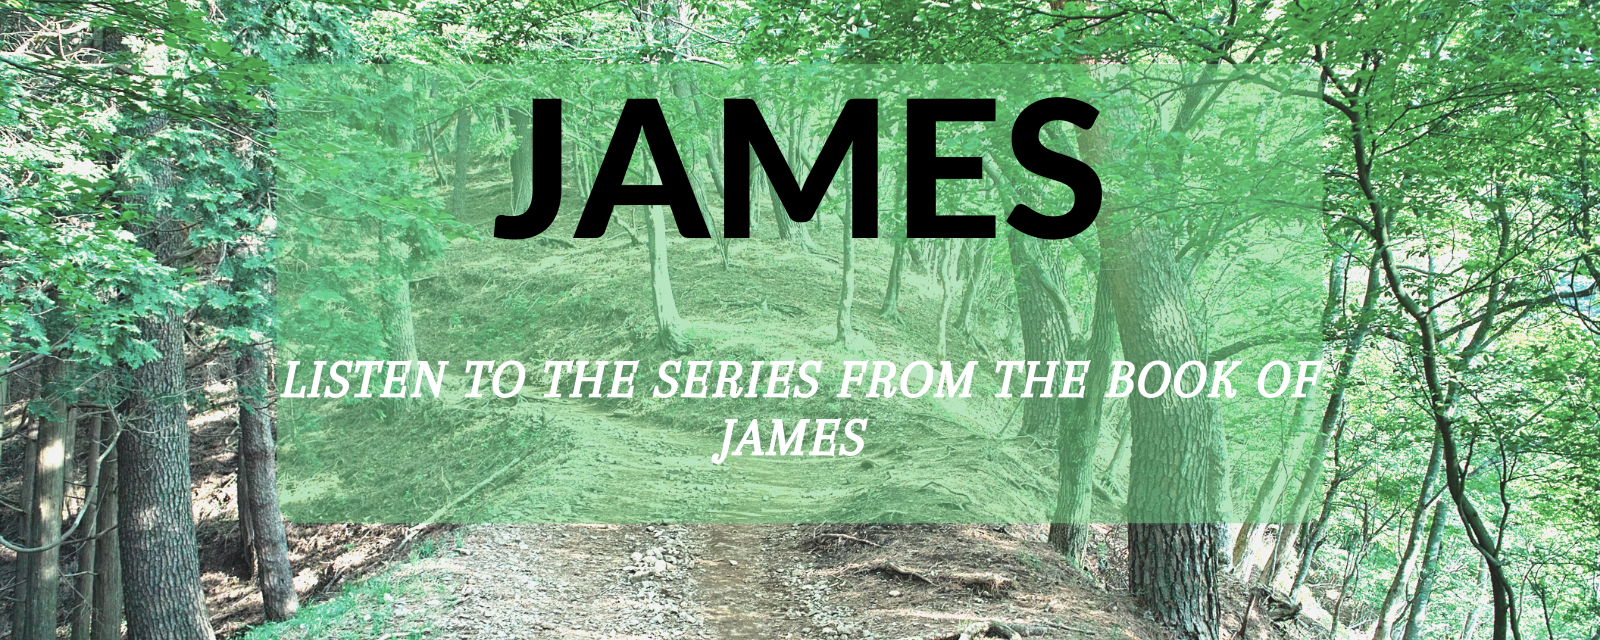 James series banner